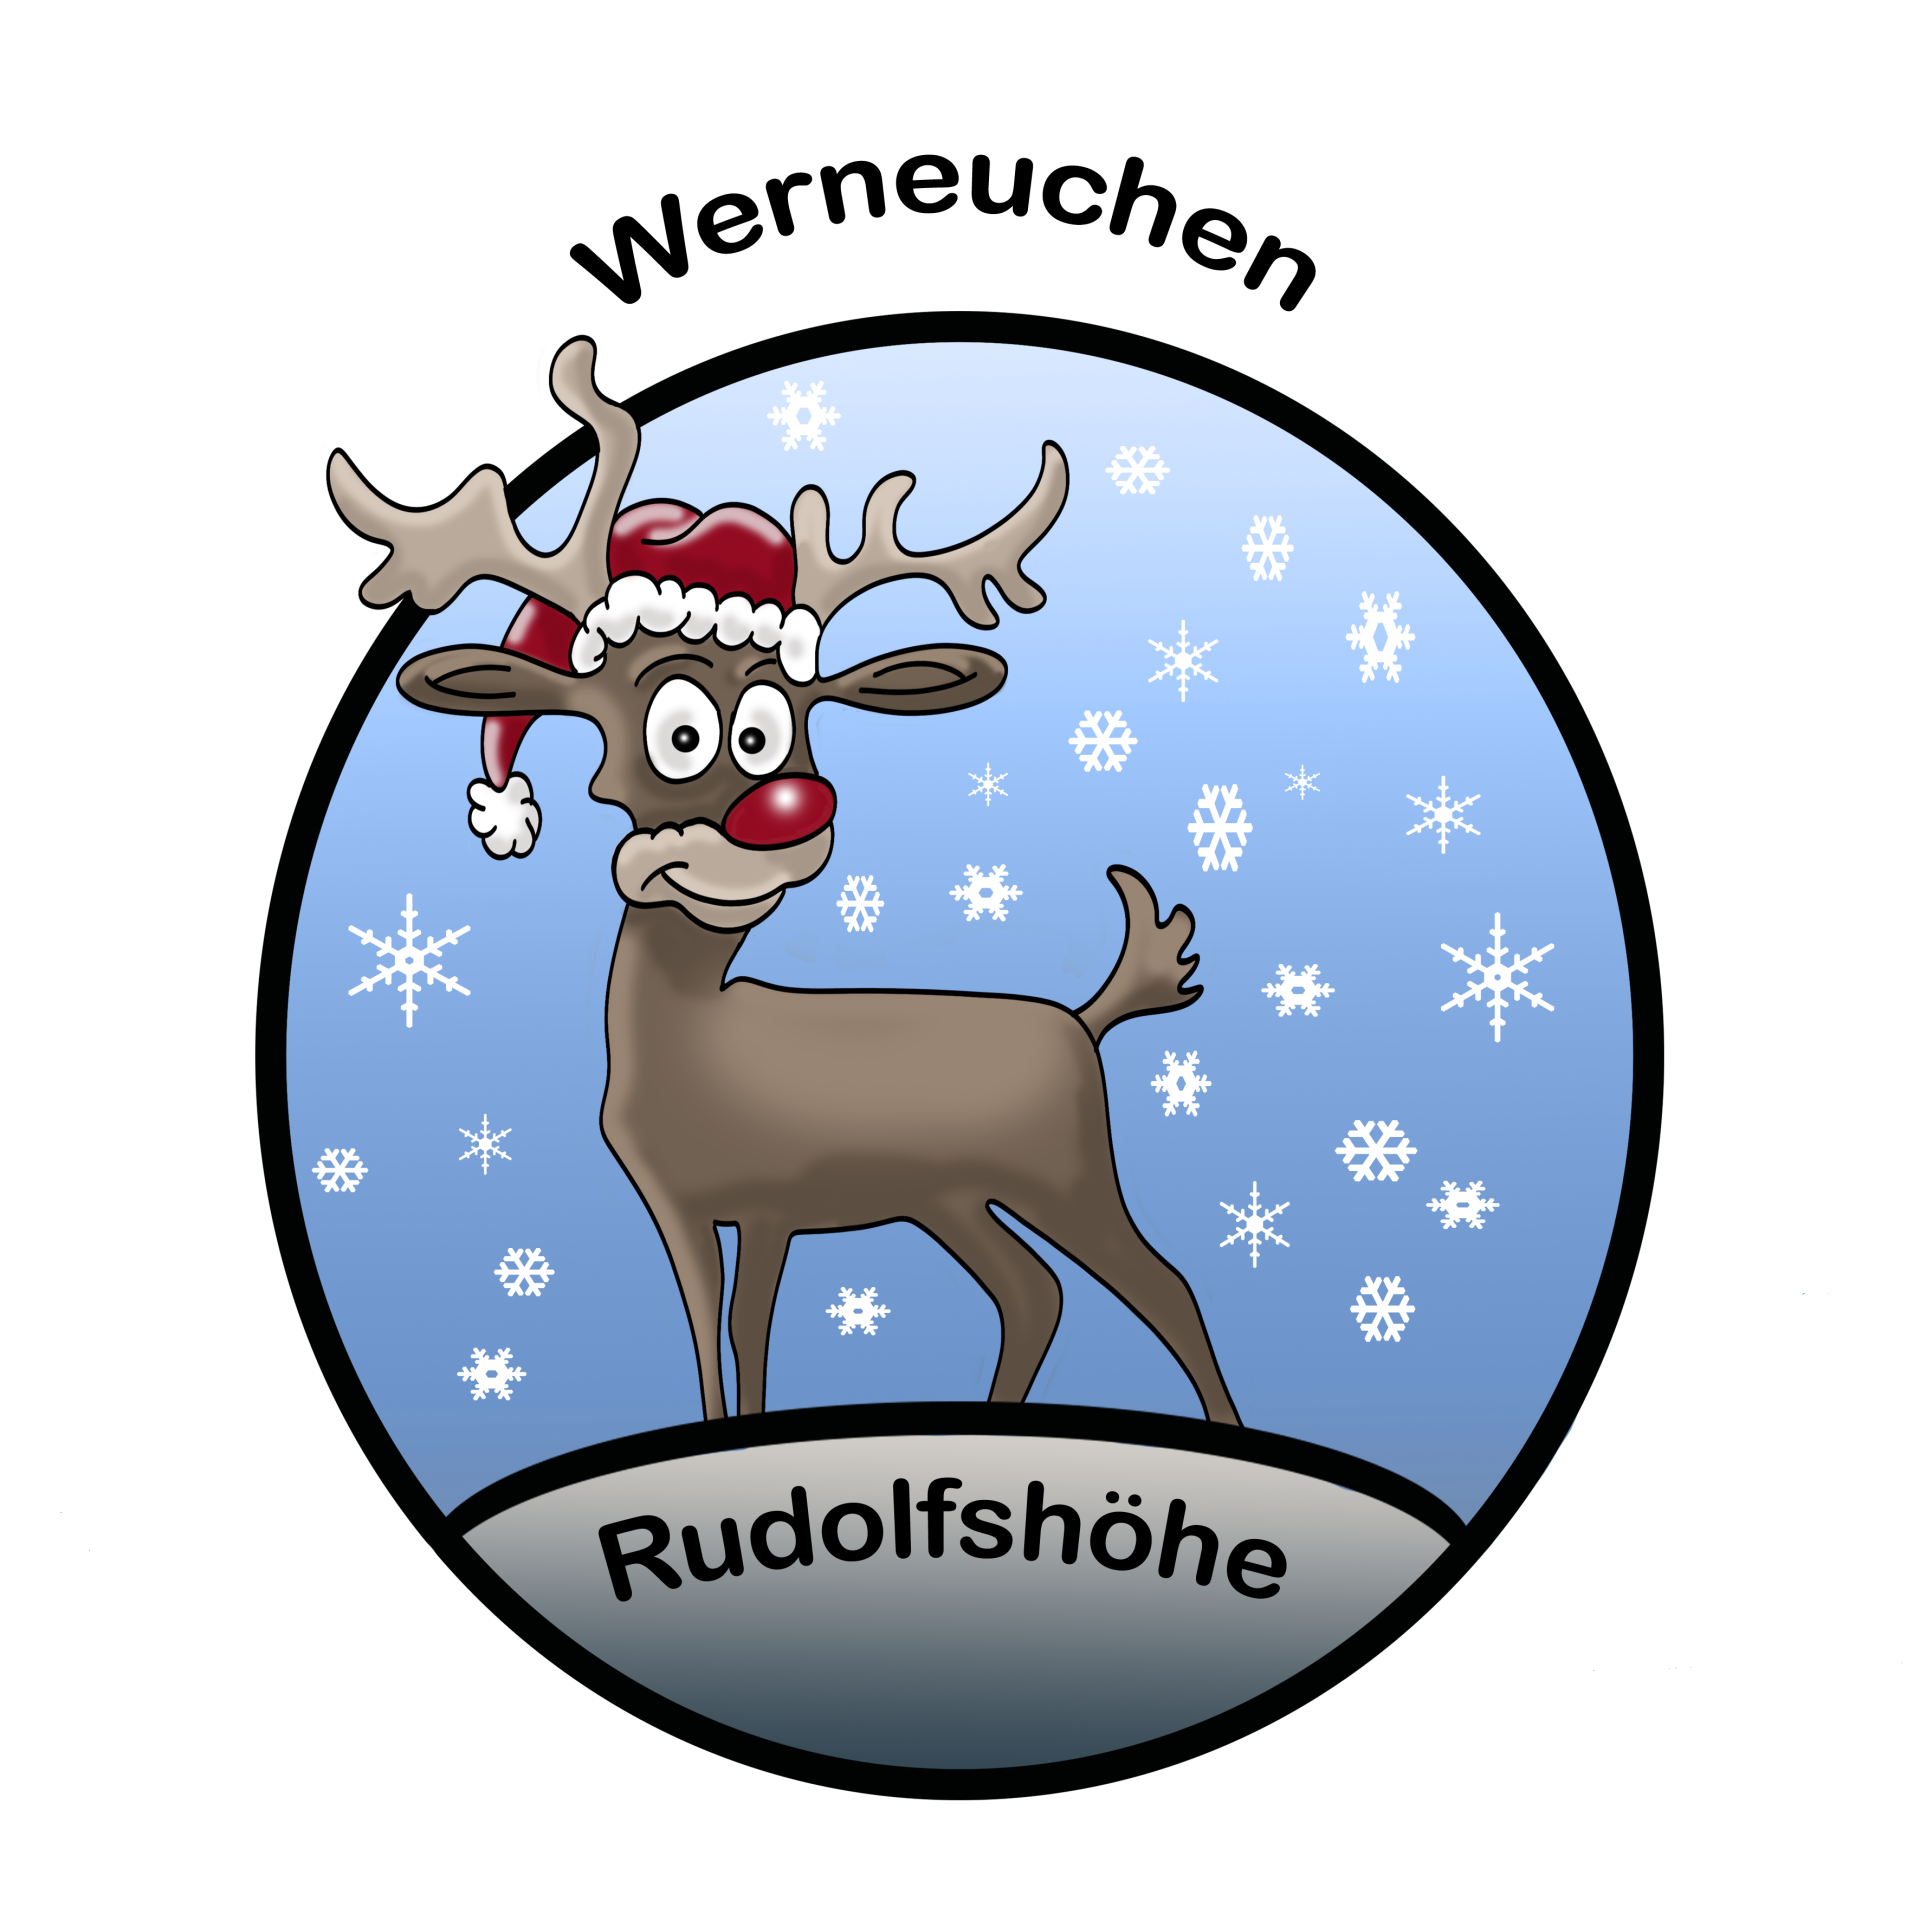 Rudolfshöhe